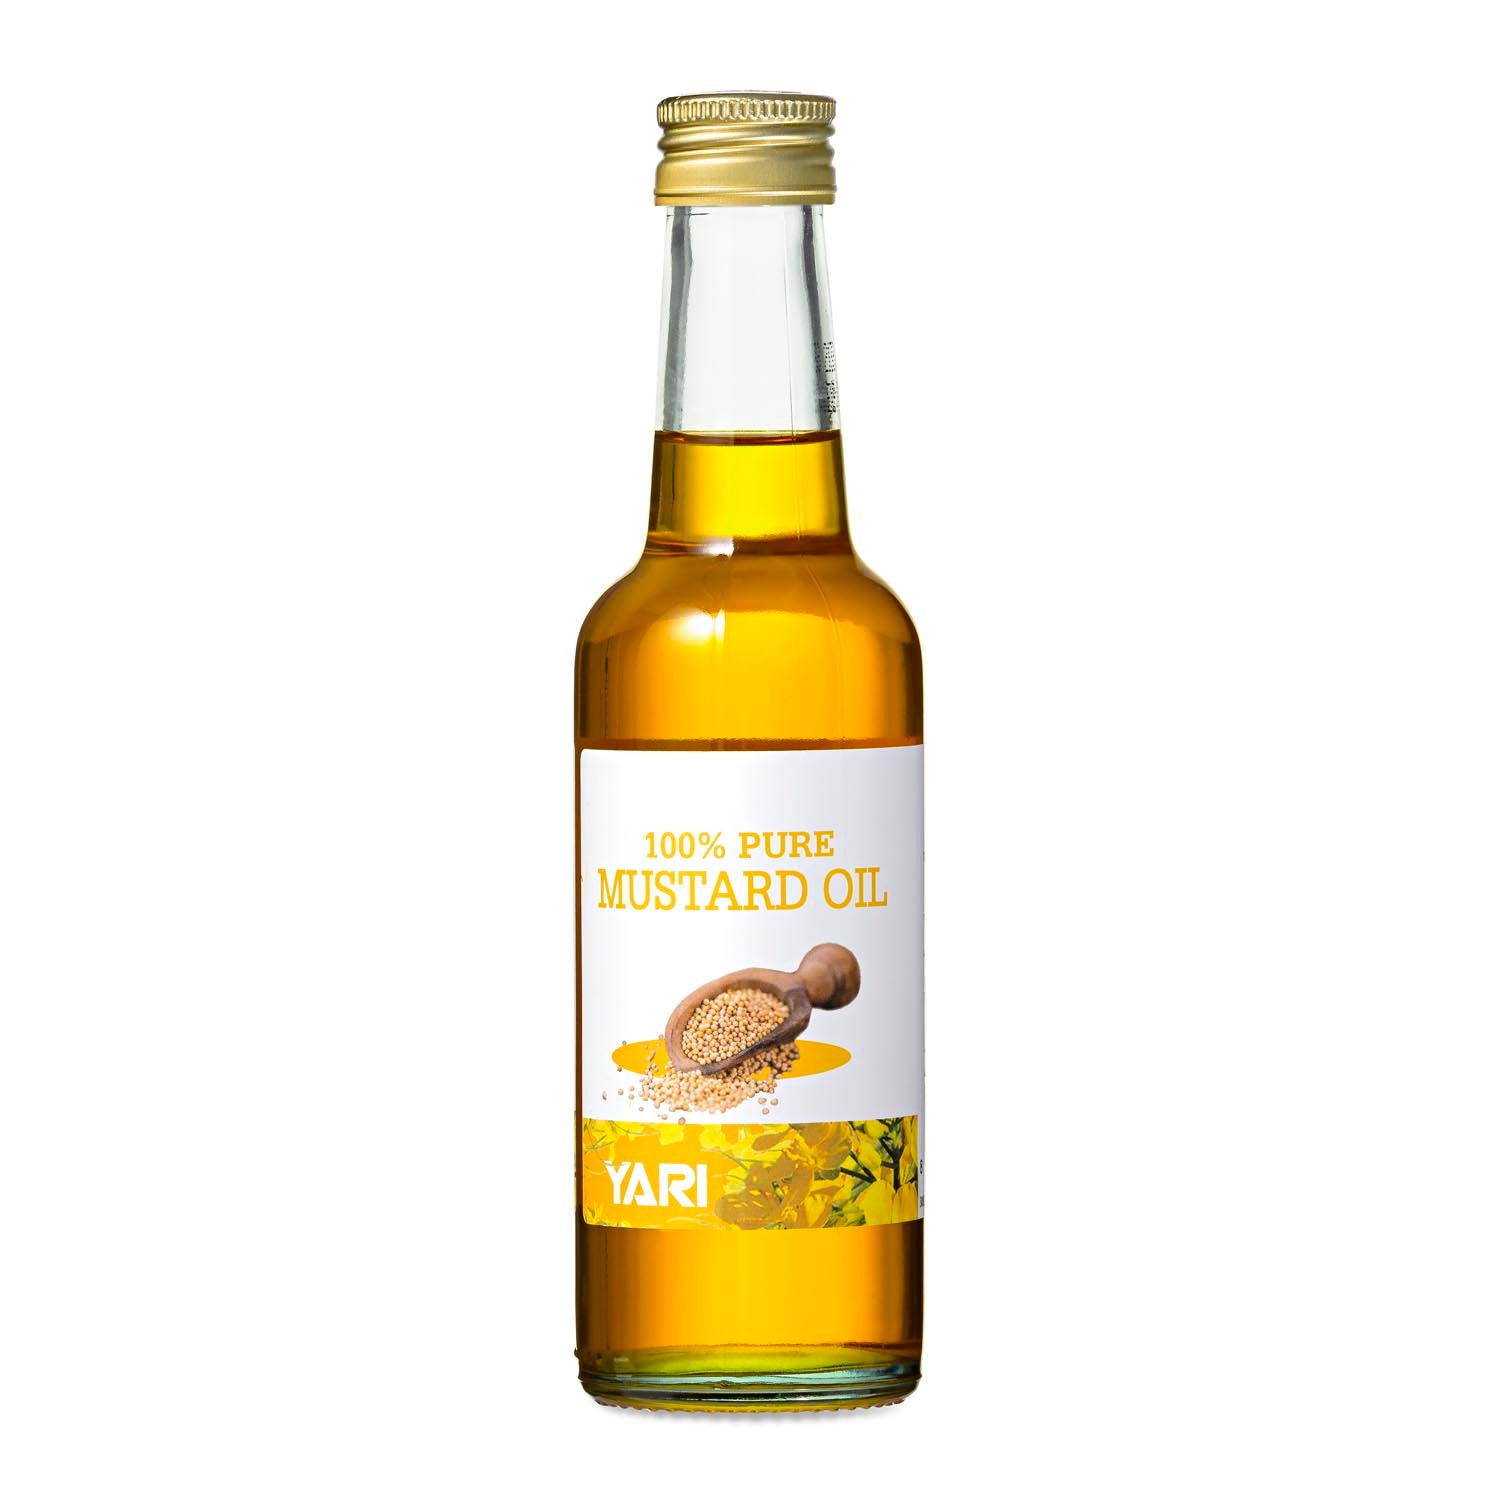 Yari - 100% Pure Mustard Oil 250ml